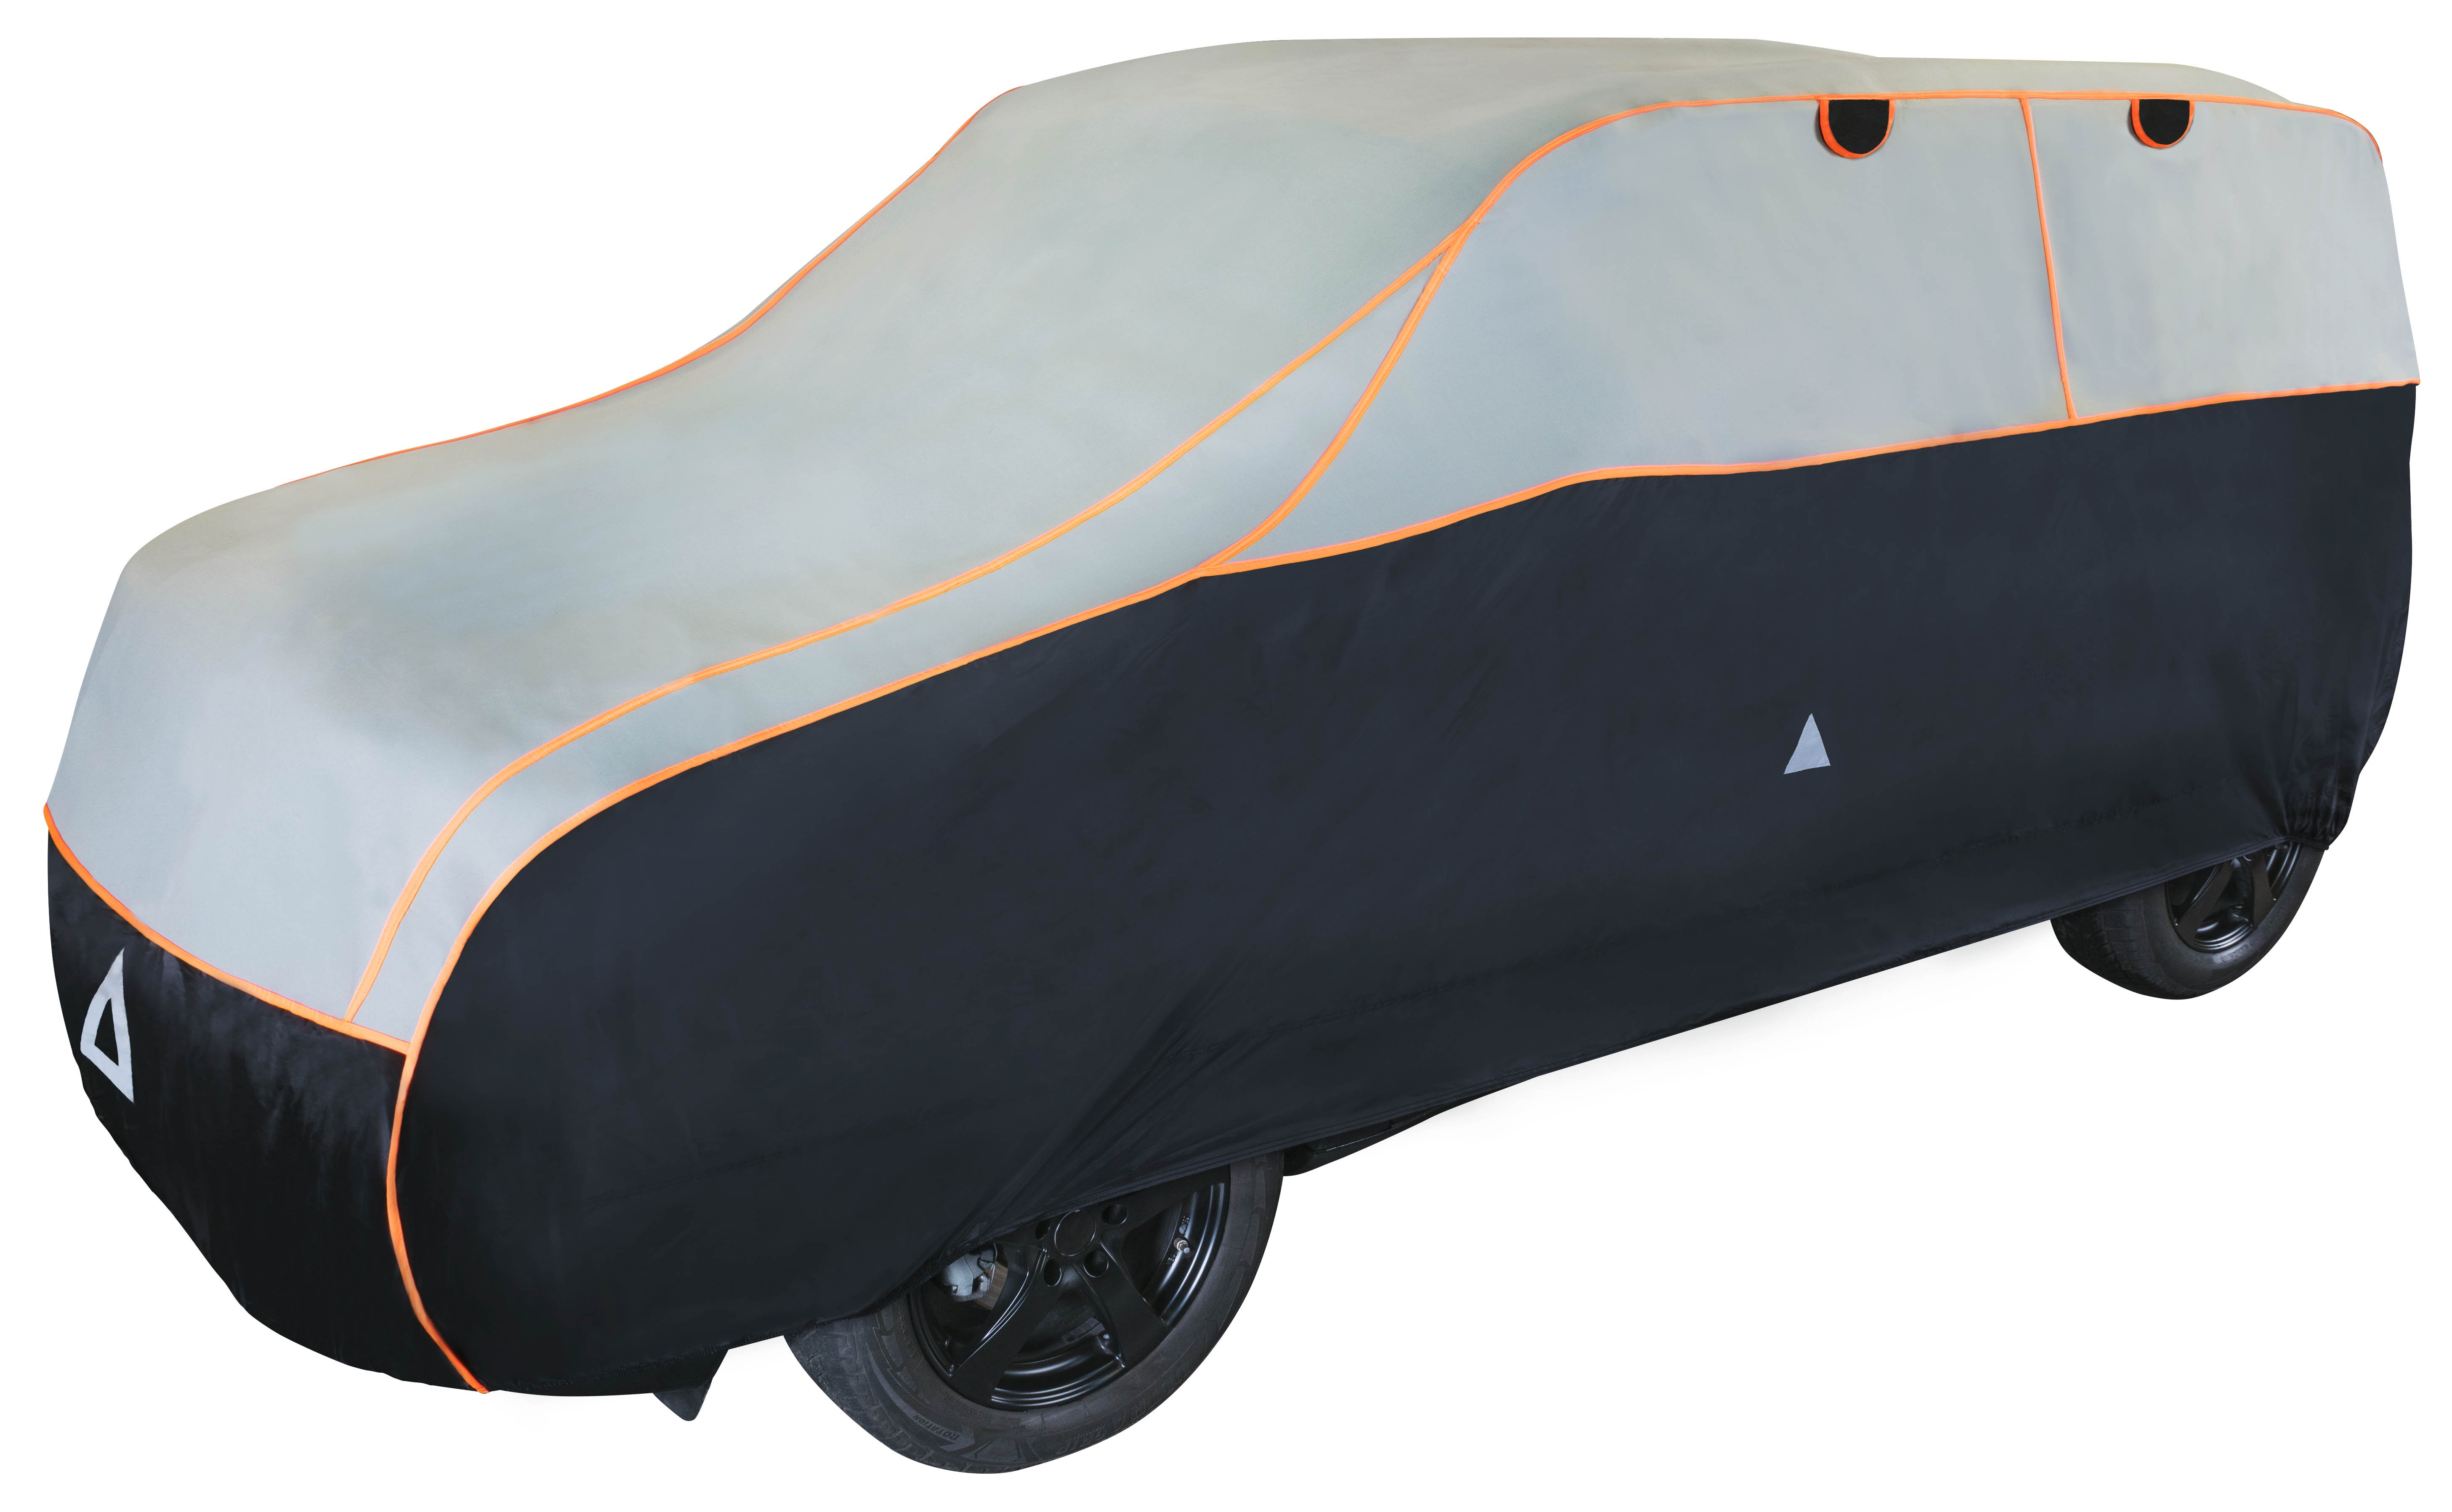 Car hail protection tarpaulin Perma Protect SUV size M